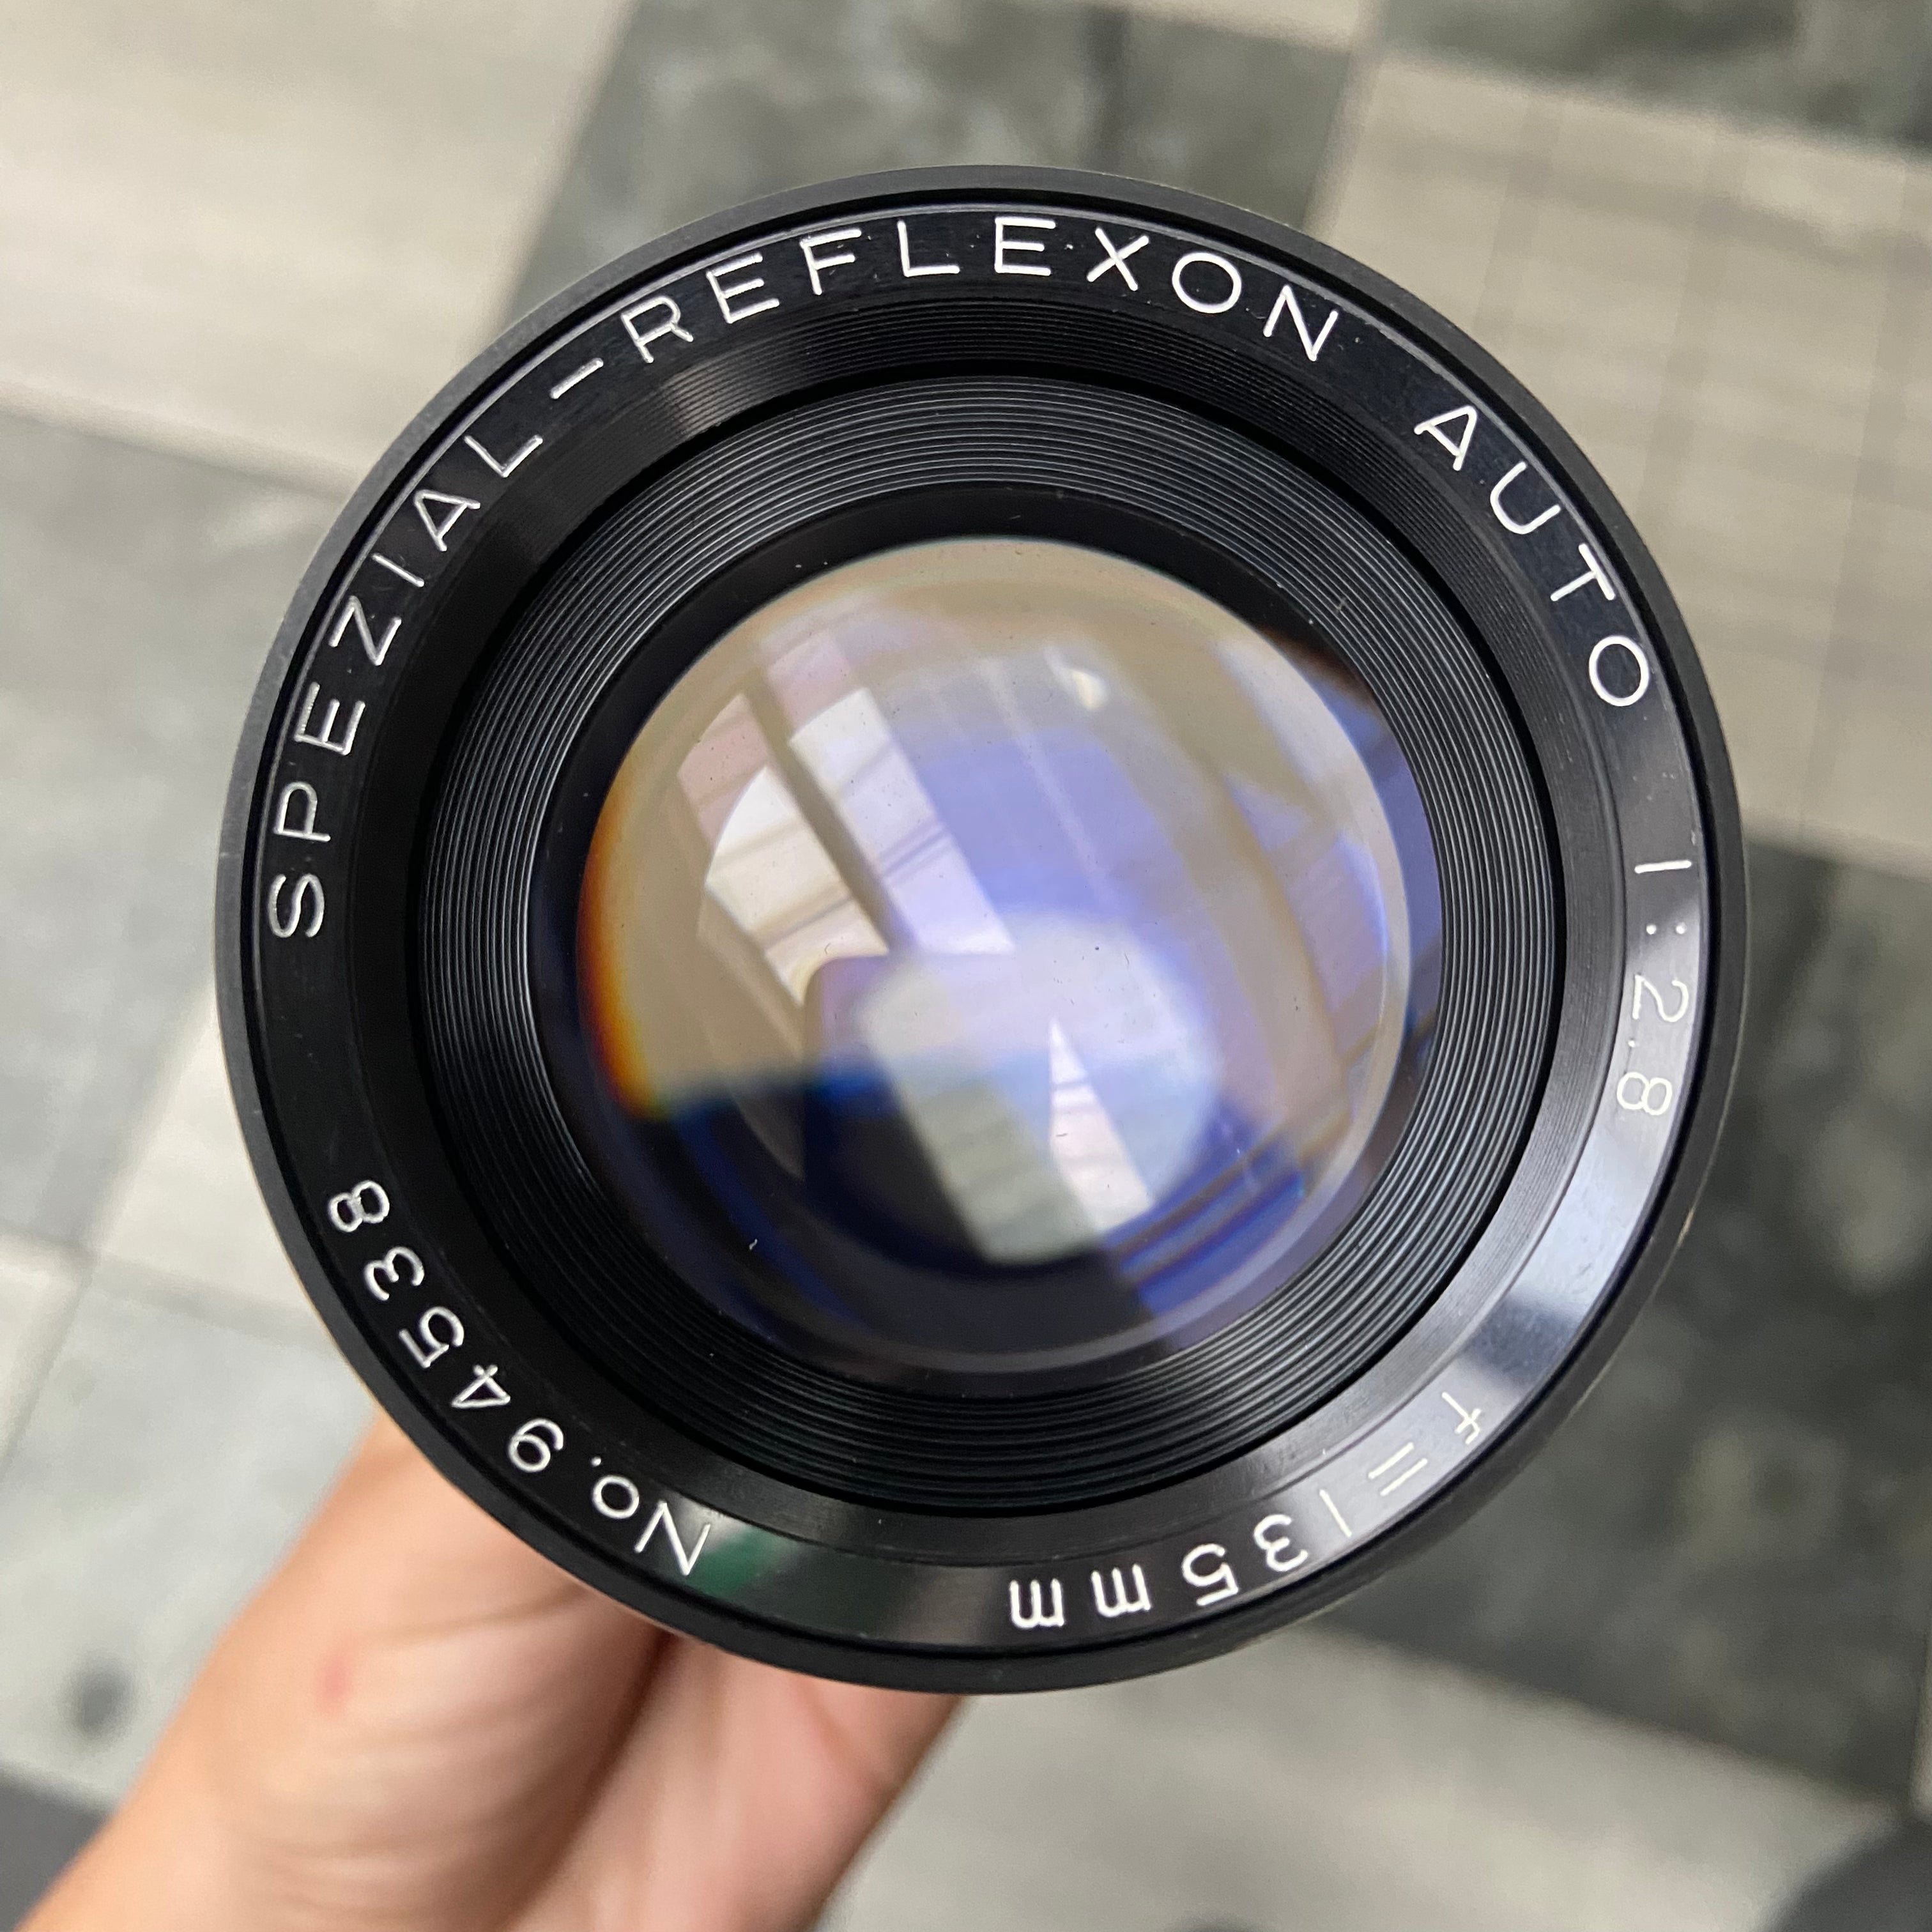 AUTO-REFLEXON 135mm F2.8［8-2］